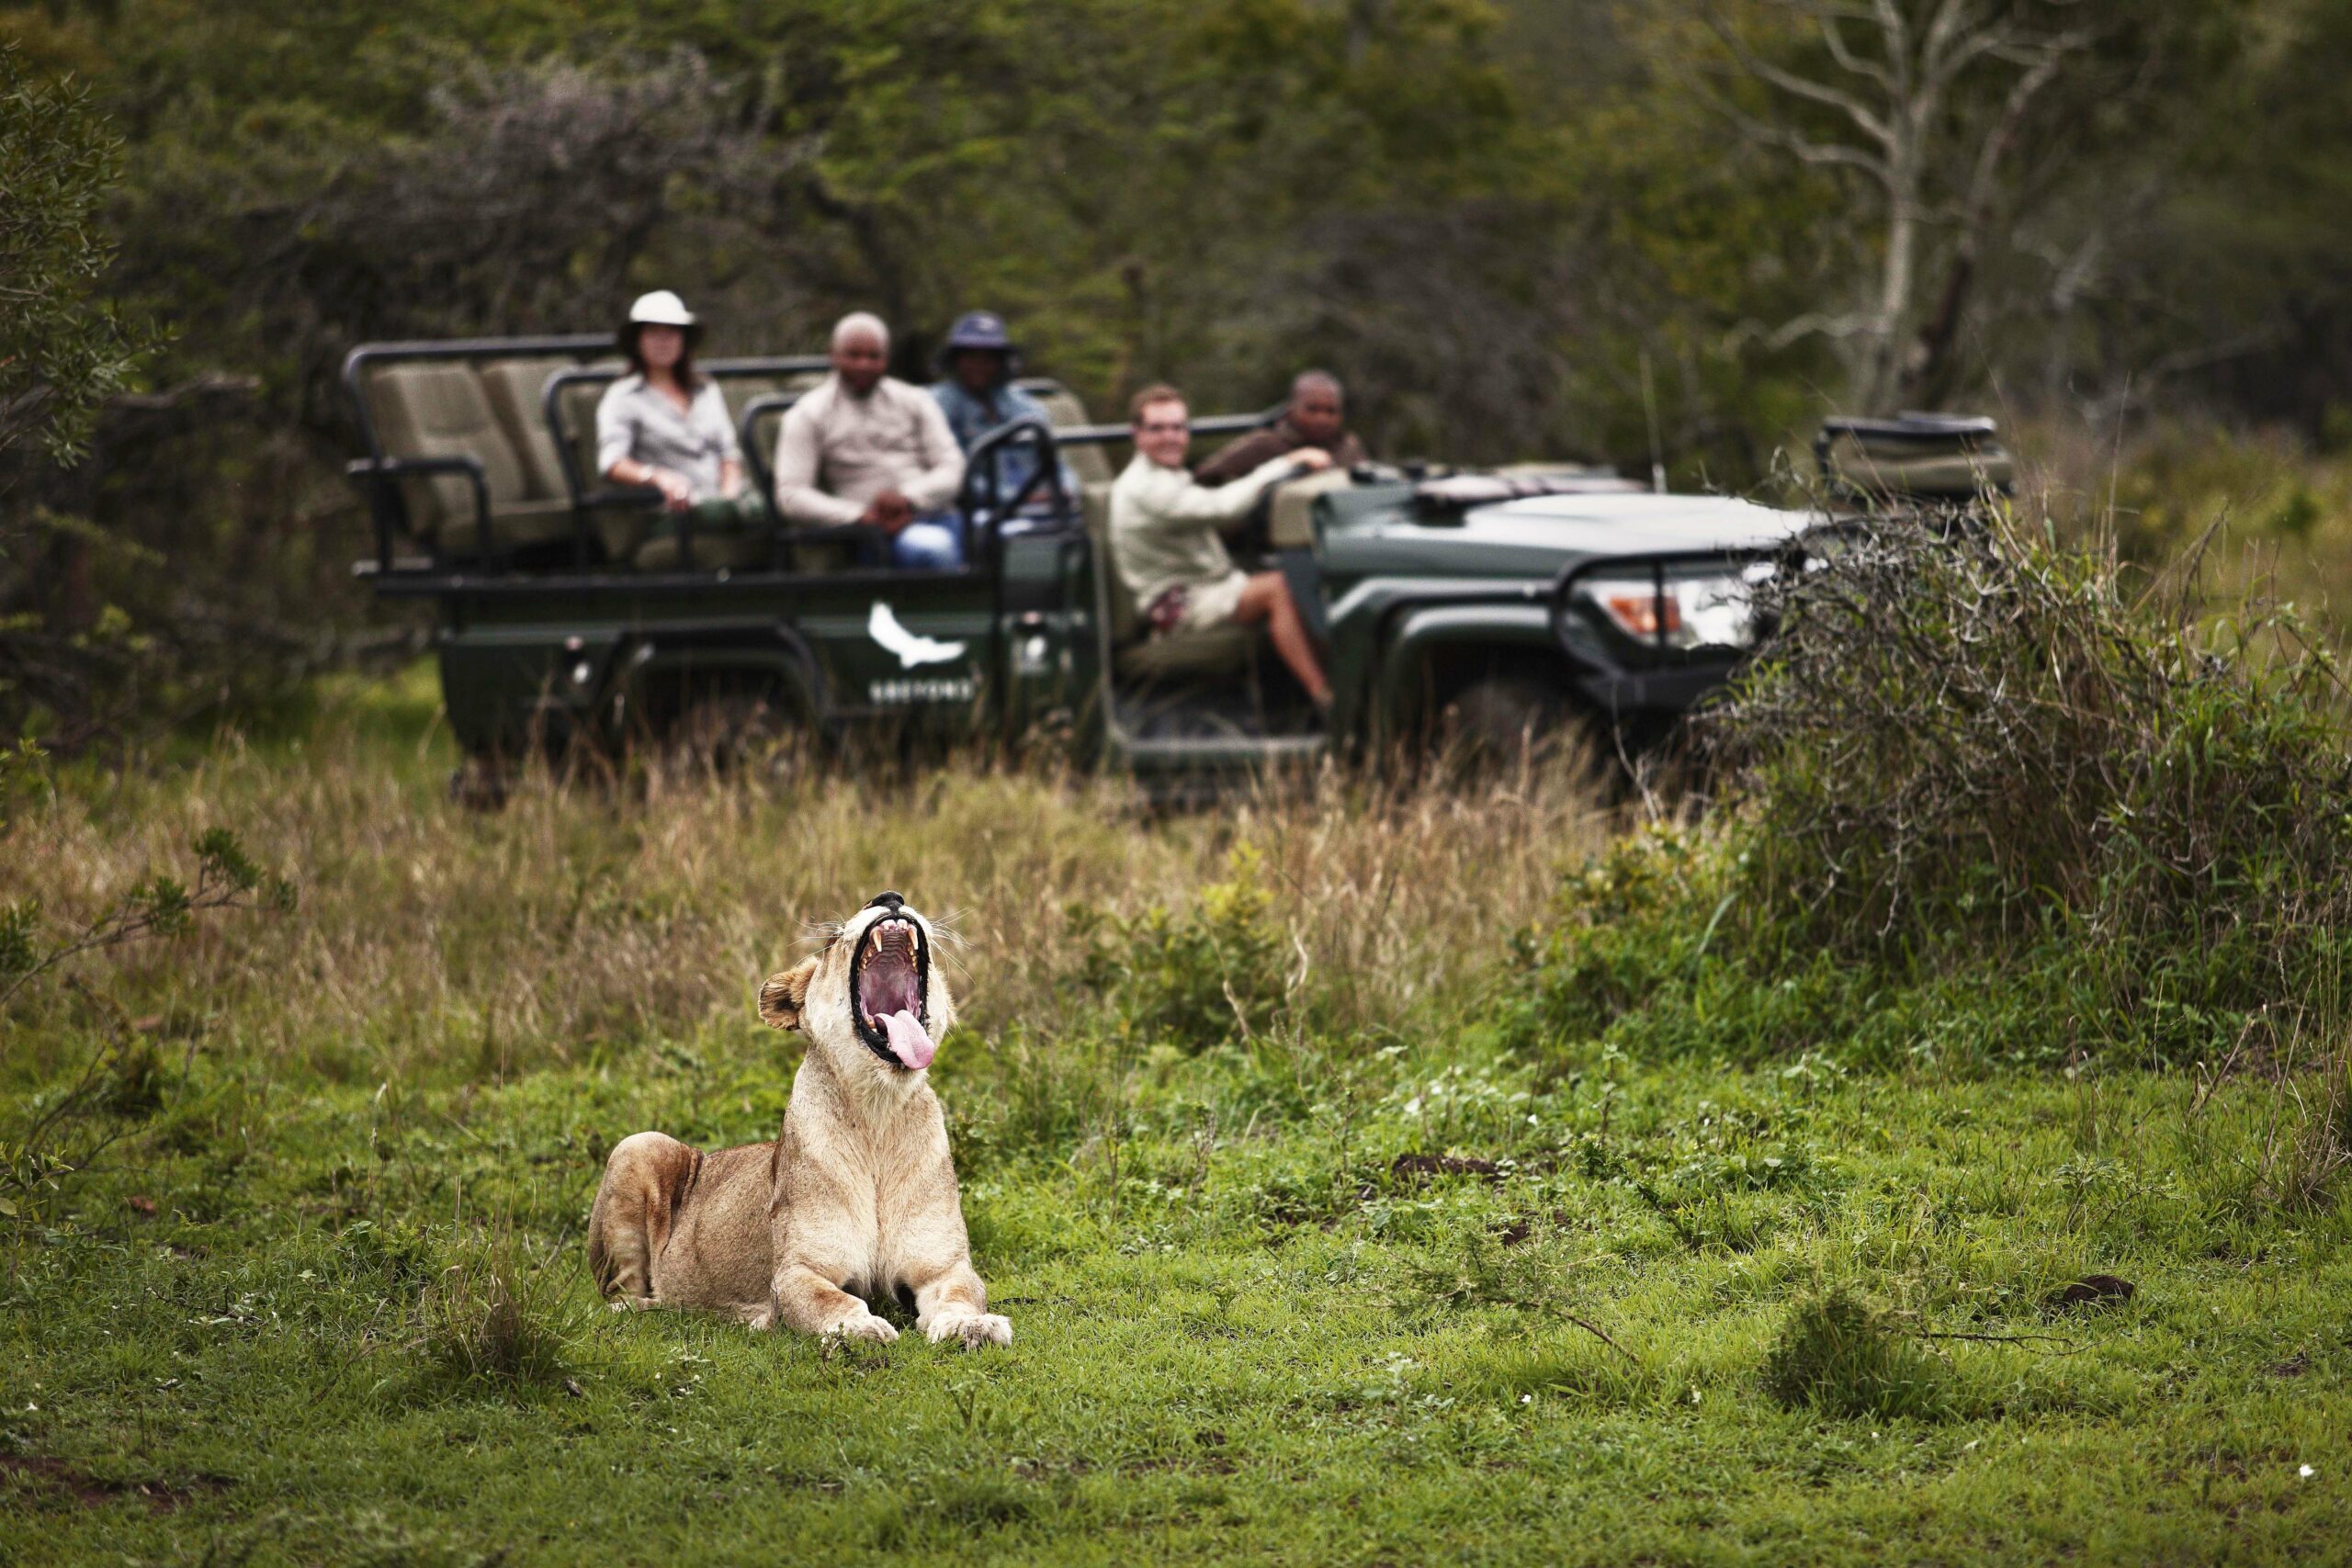 Lion, on safari in Africa